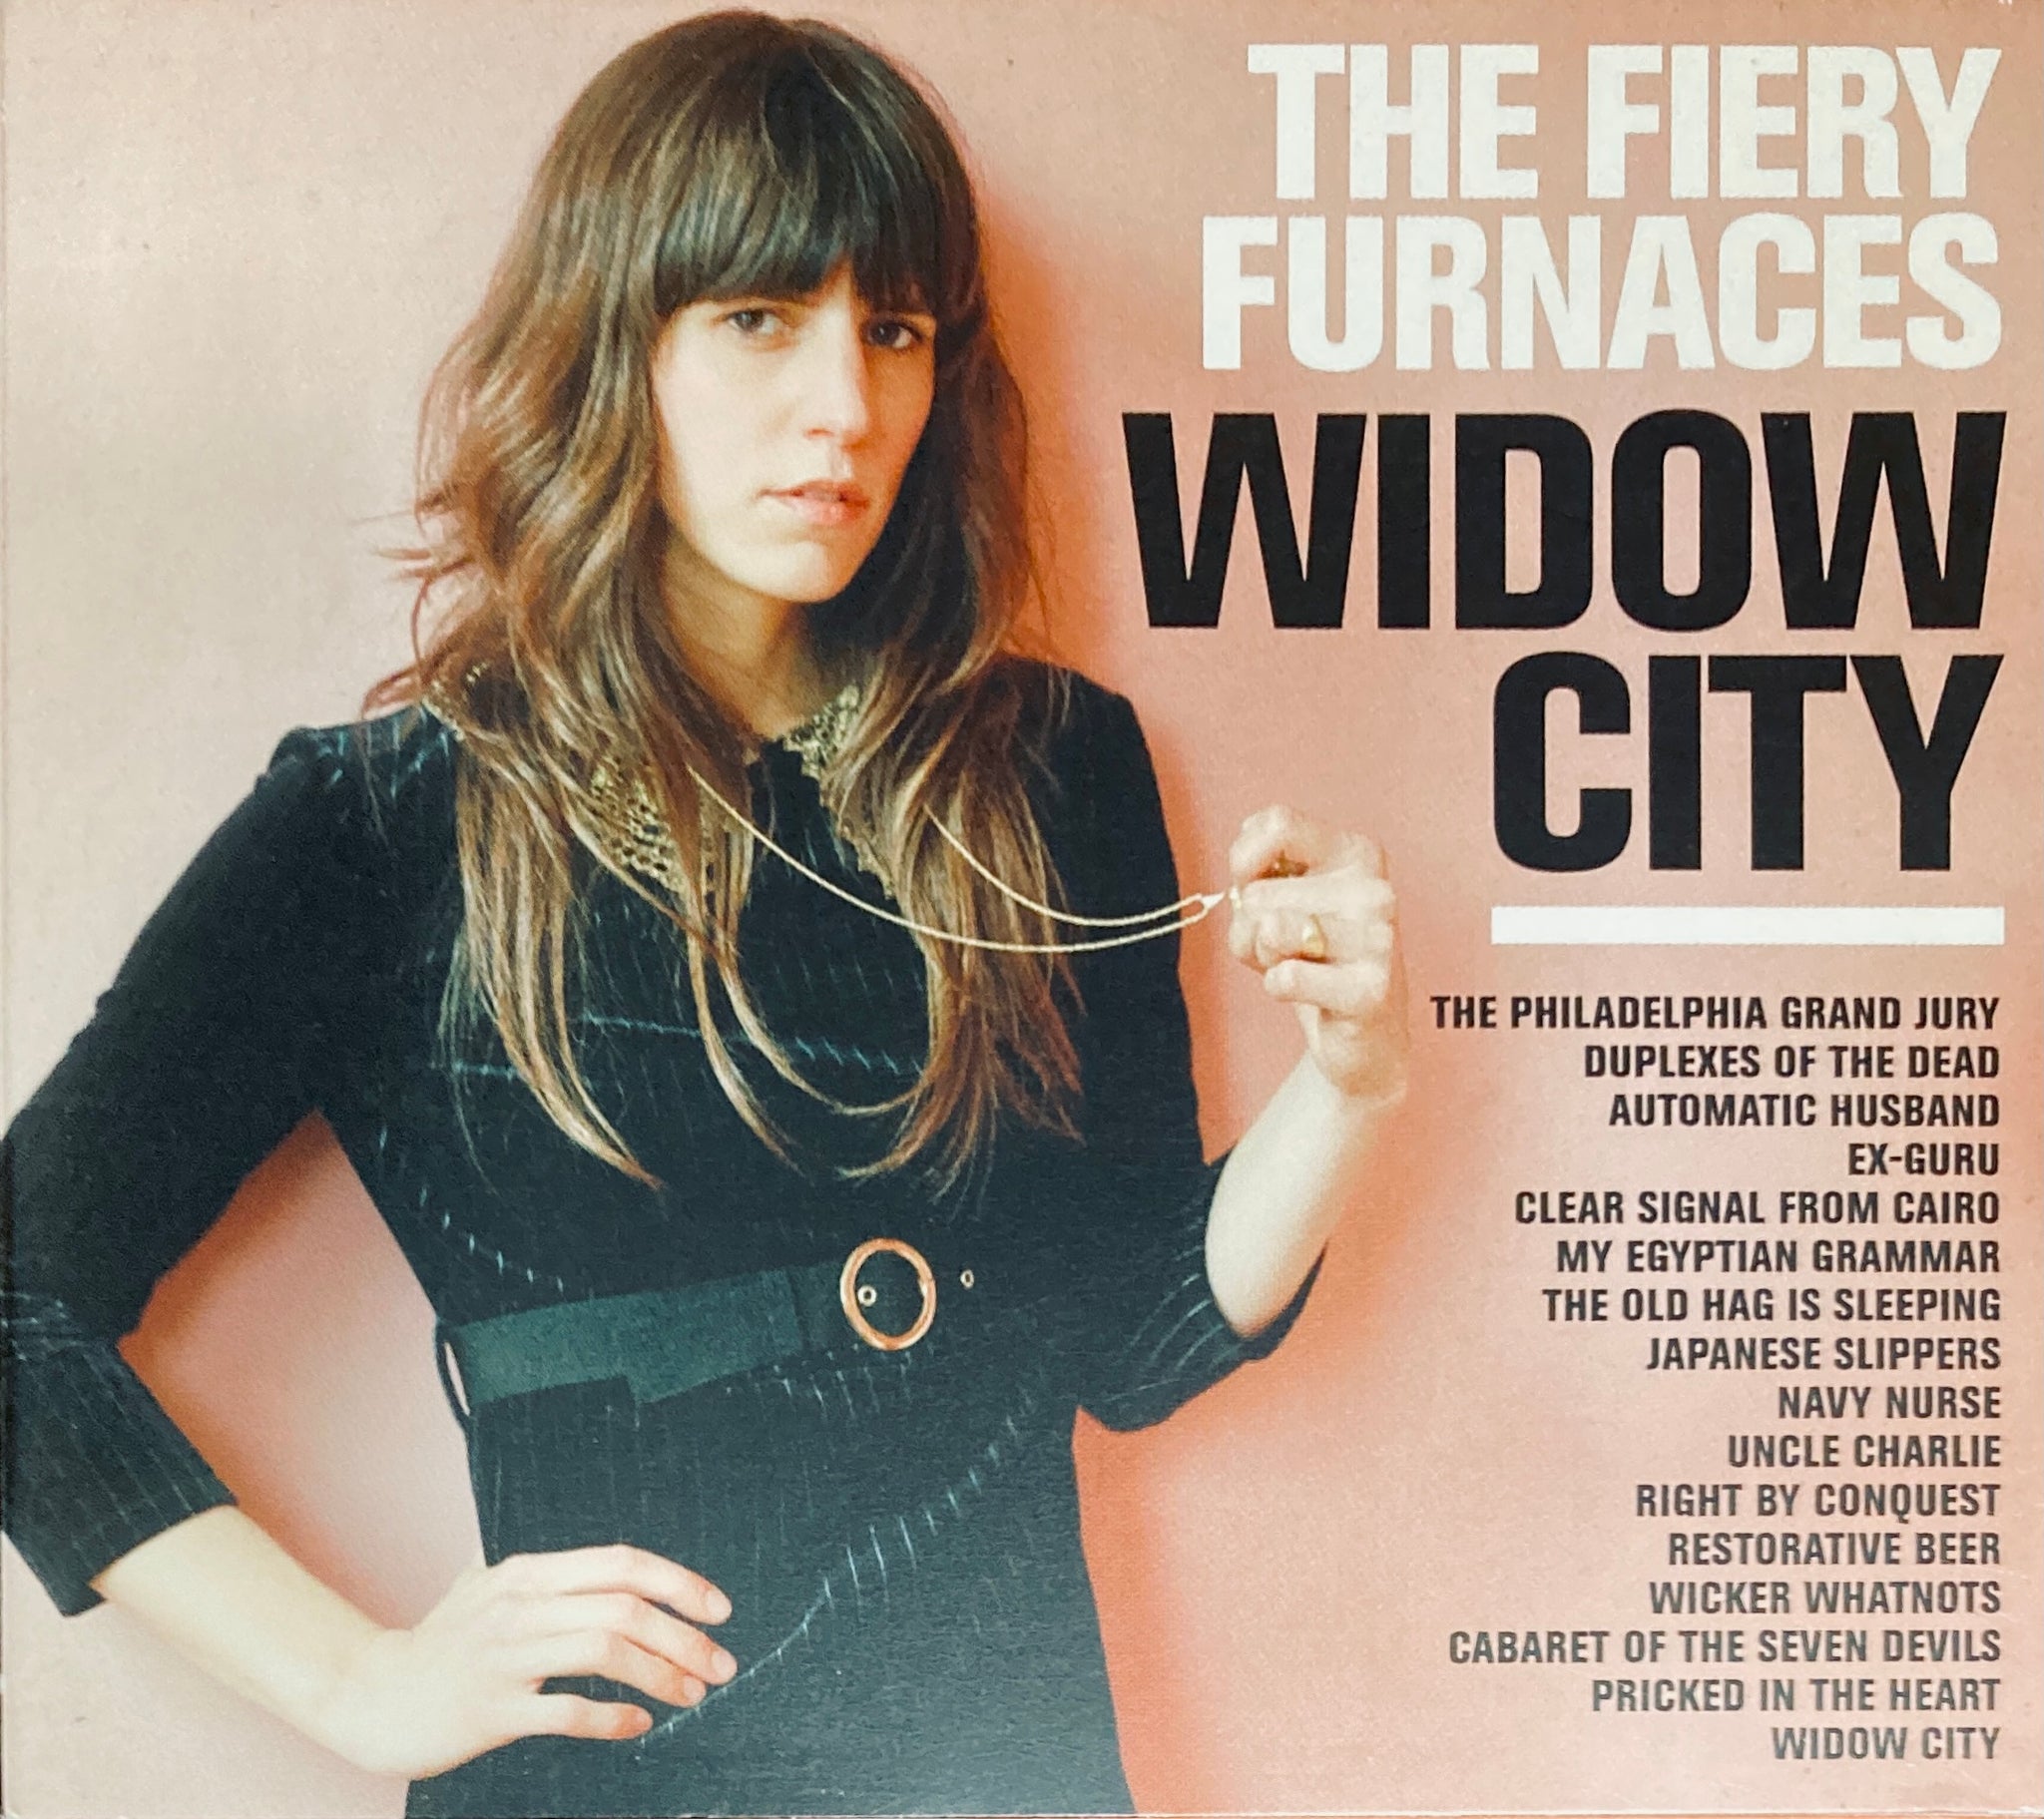 Fiery Furnaces, The "Widow City" CD (2007)